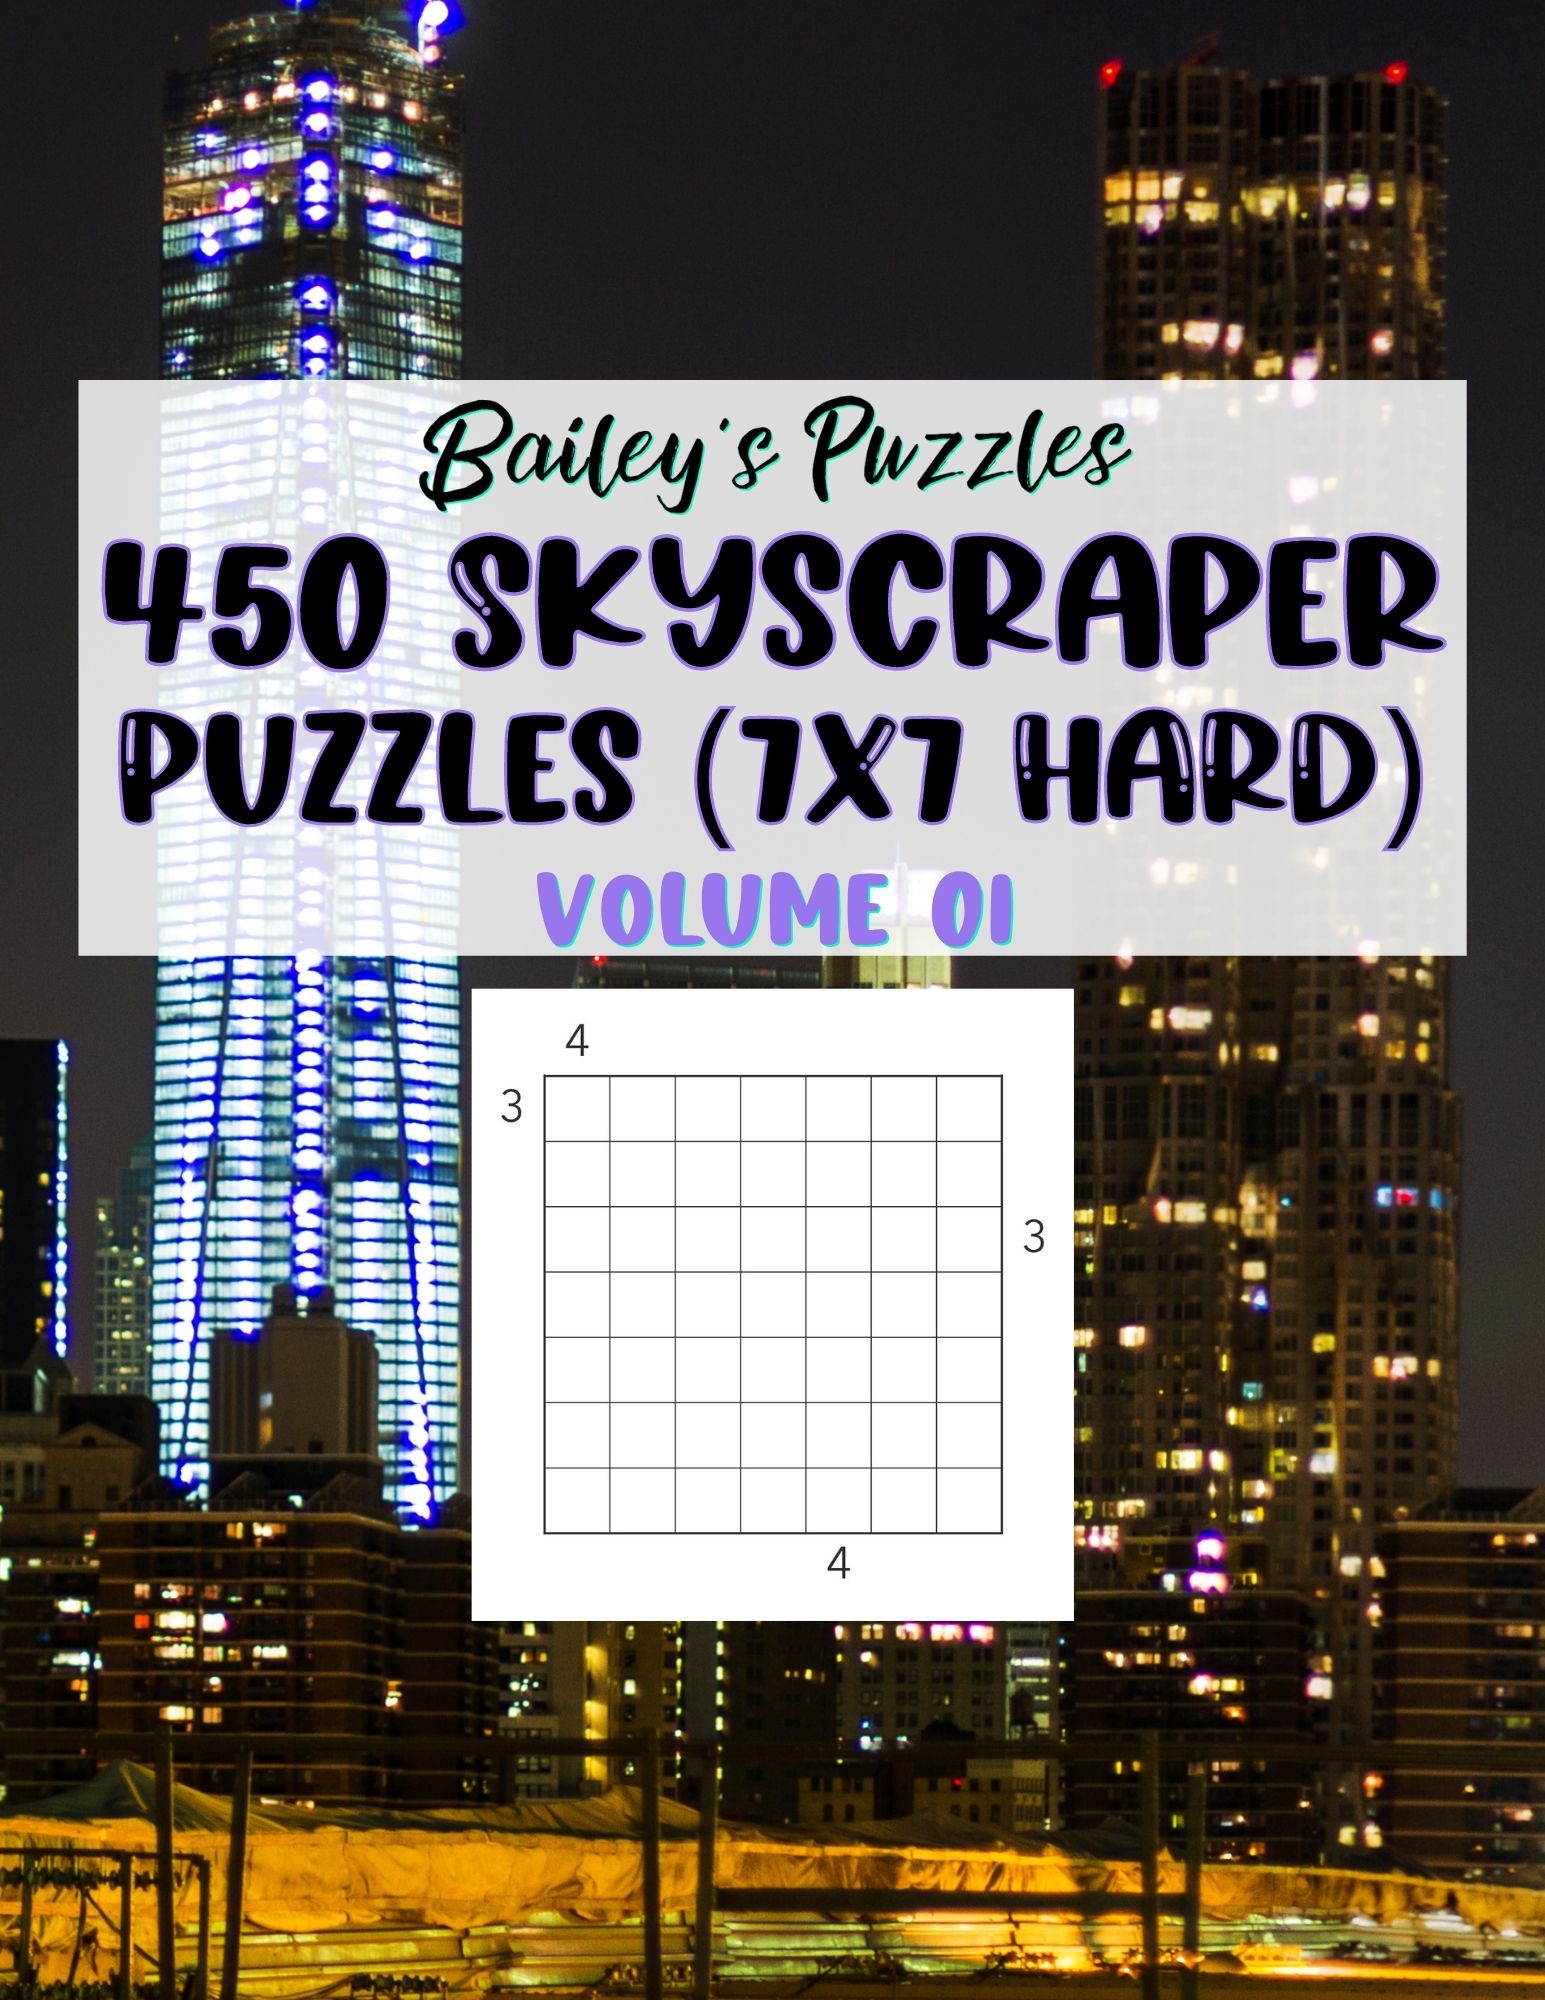 Front Cover - 450 Skyscraper Puzzles (7x7, hard)